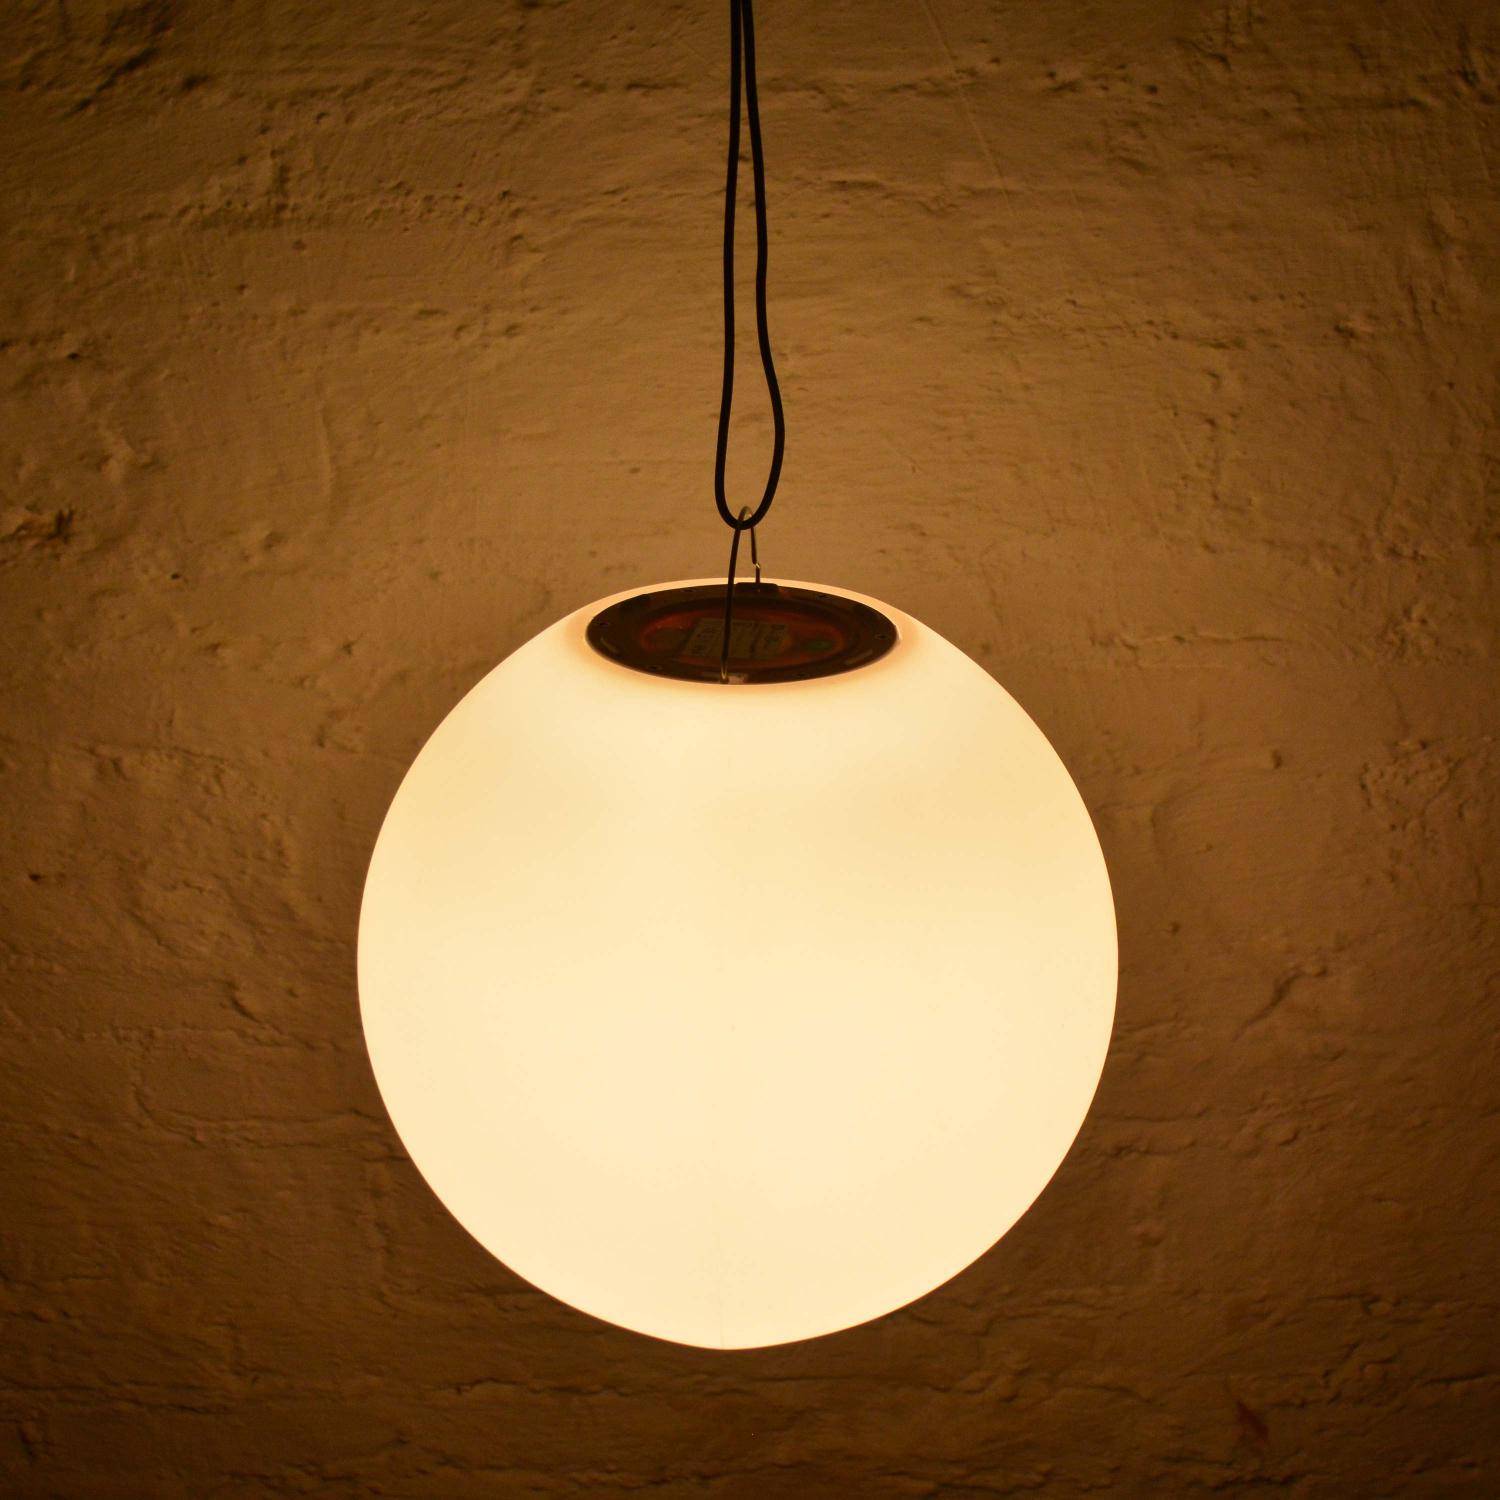 30cm spherical LED lamp – Decorative light sphere, remote control, Warm white Photo2